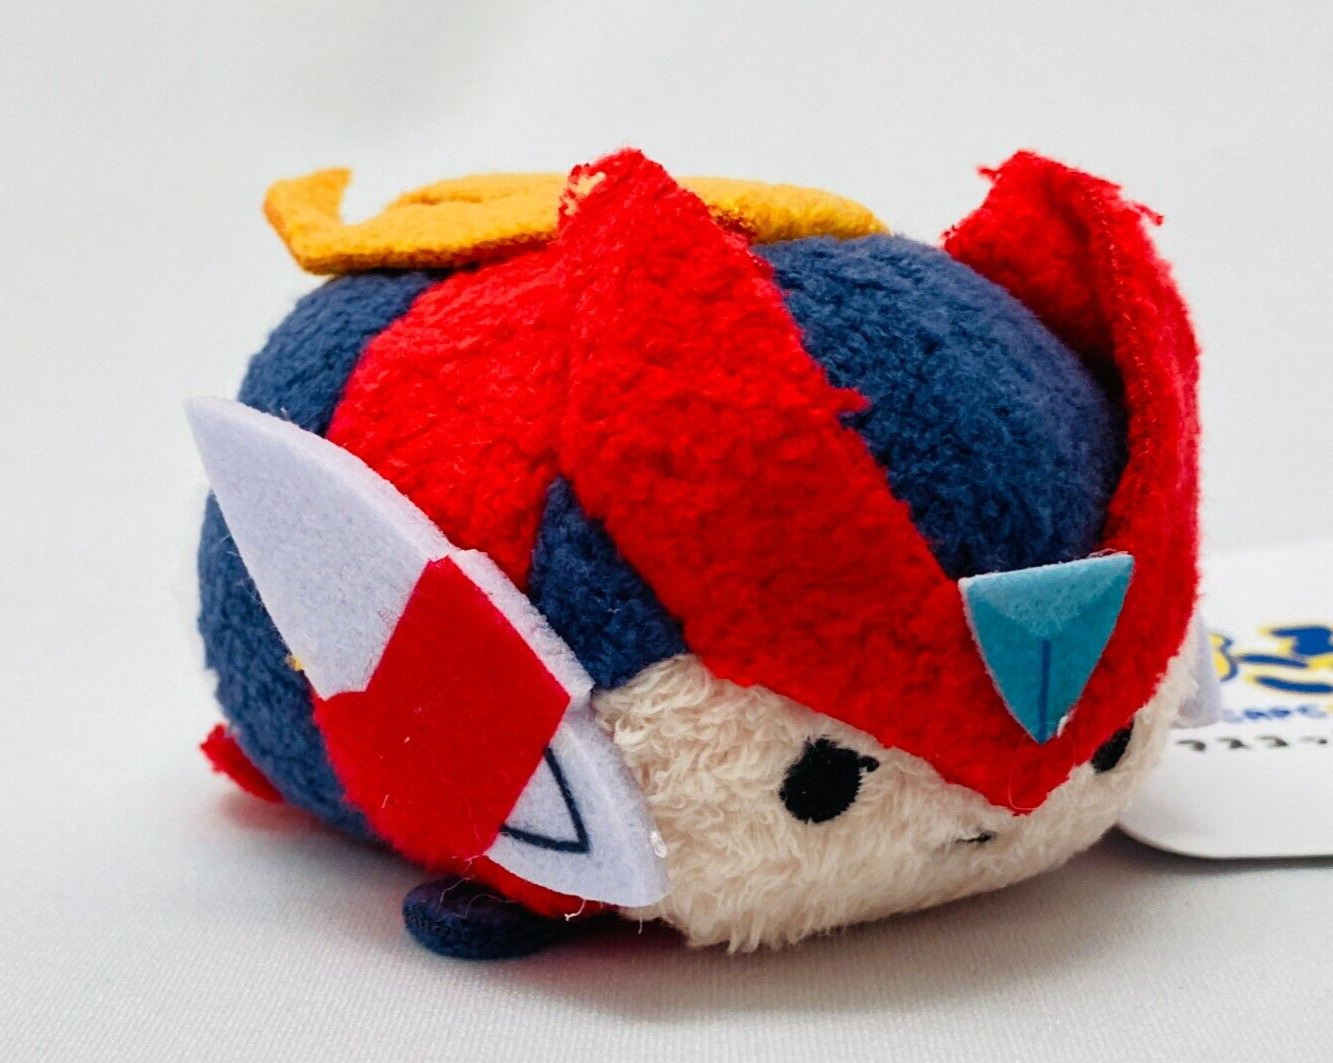 CAPCOM Capukoron mascot plush toy / Rockman Zero Z / Megaman Stuffed toy Japan